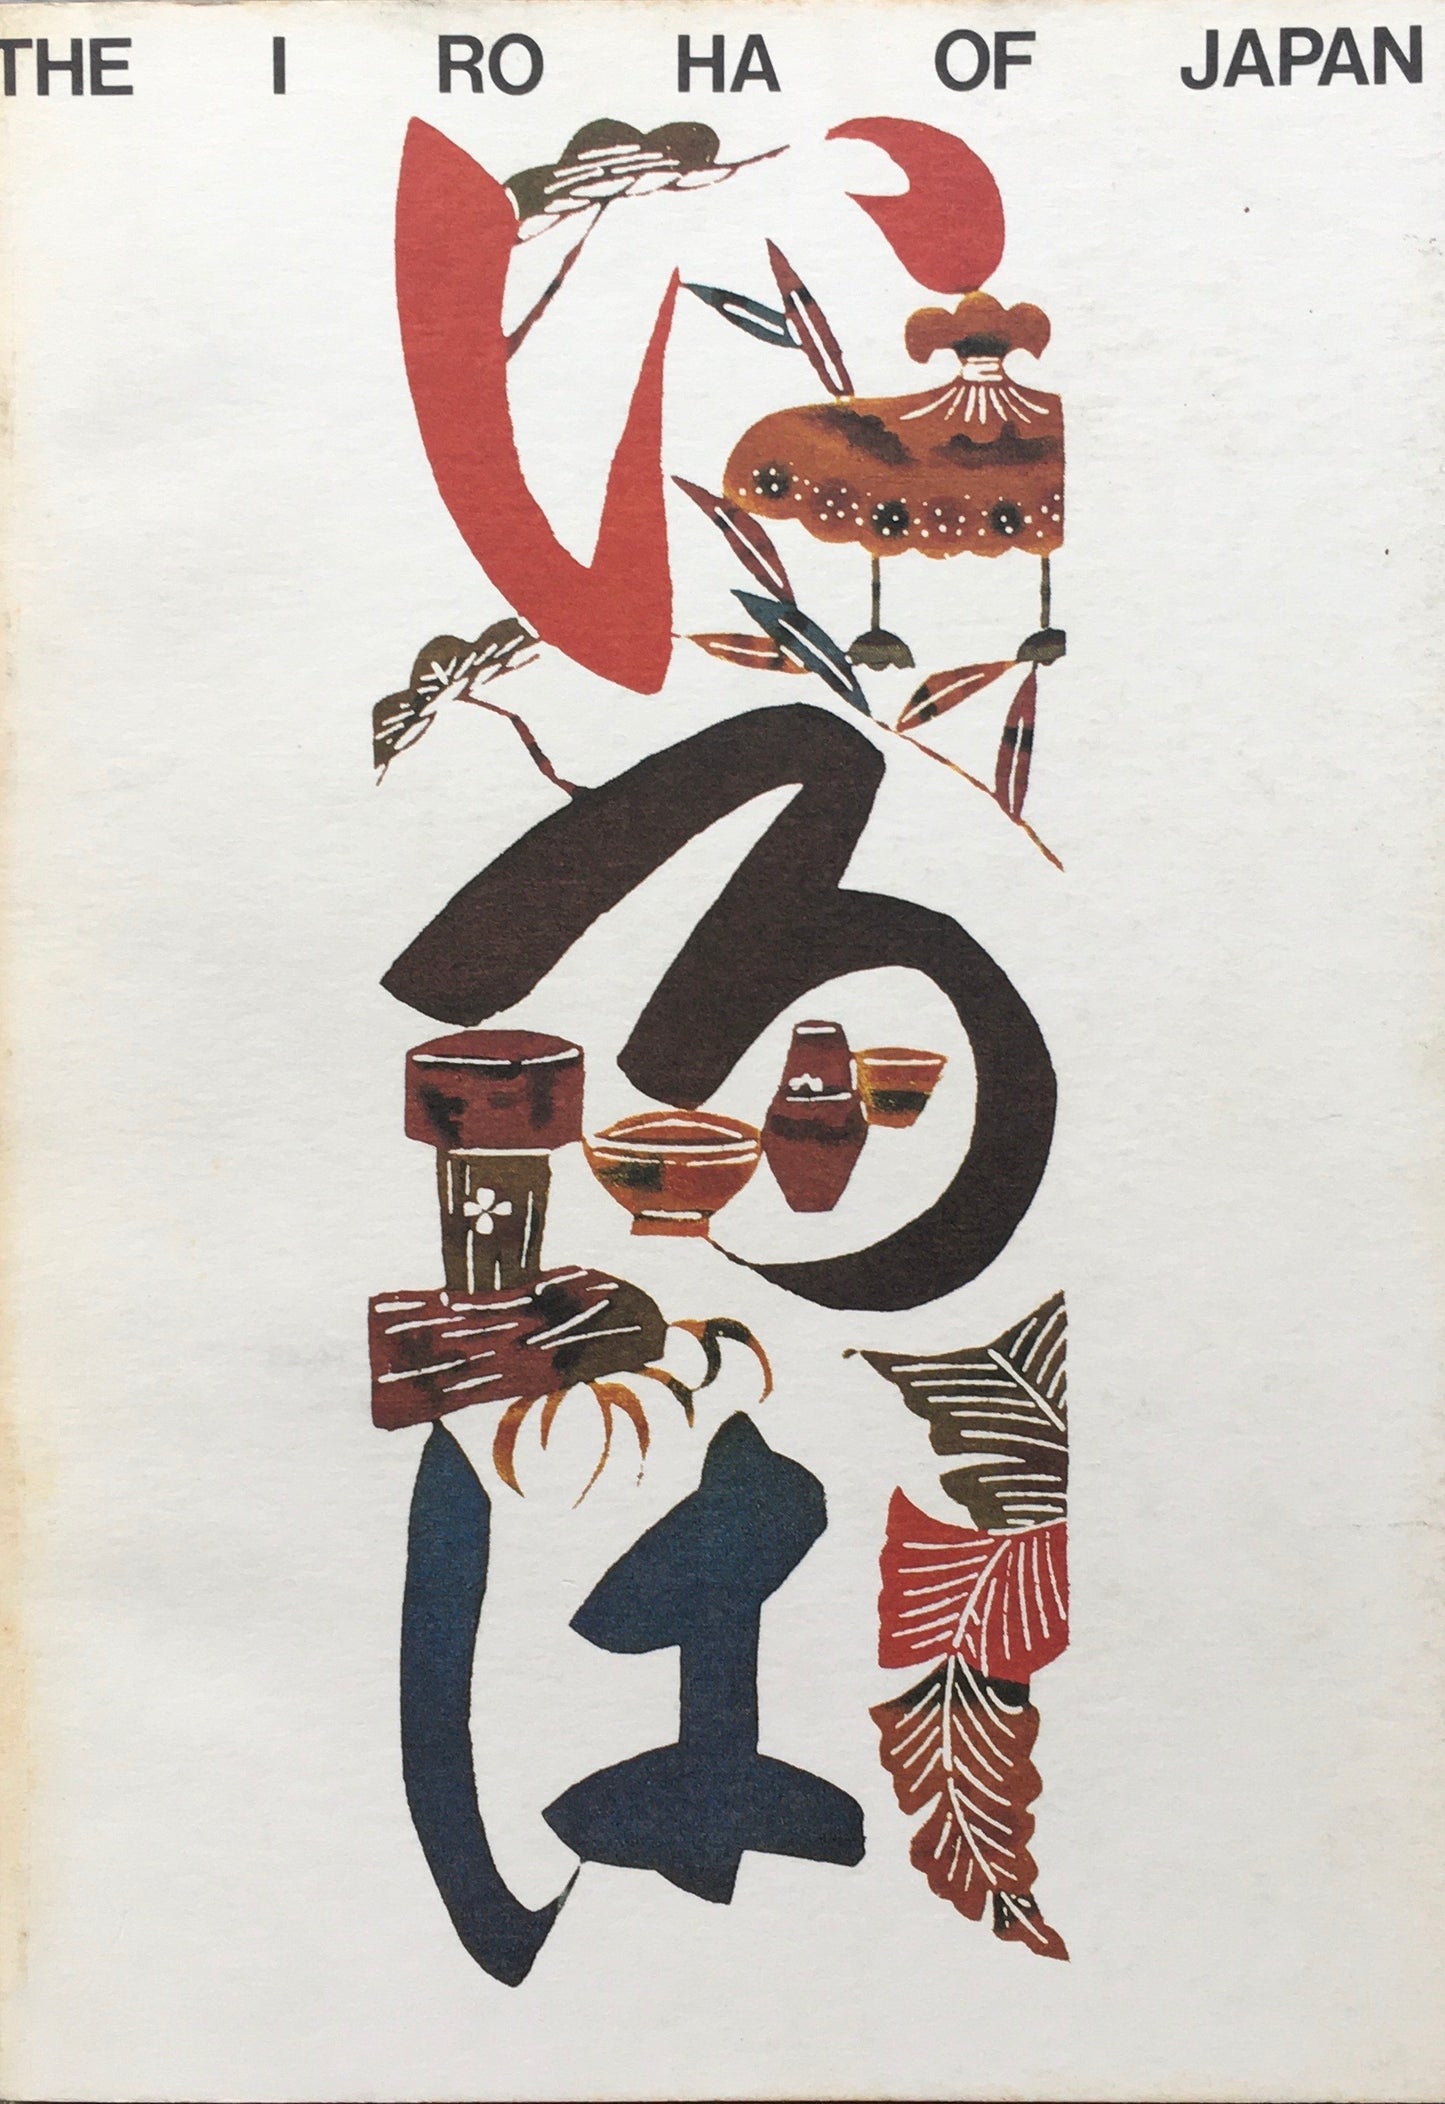 THE-I-RO-HA OF JAPAN　An Alphabetical Interpretation of Japanese Concepts　Tsune Sesoko　Ikko Tanaka